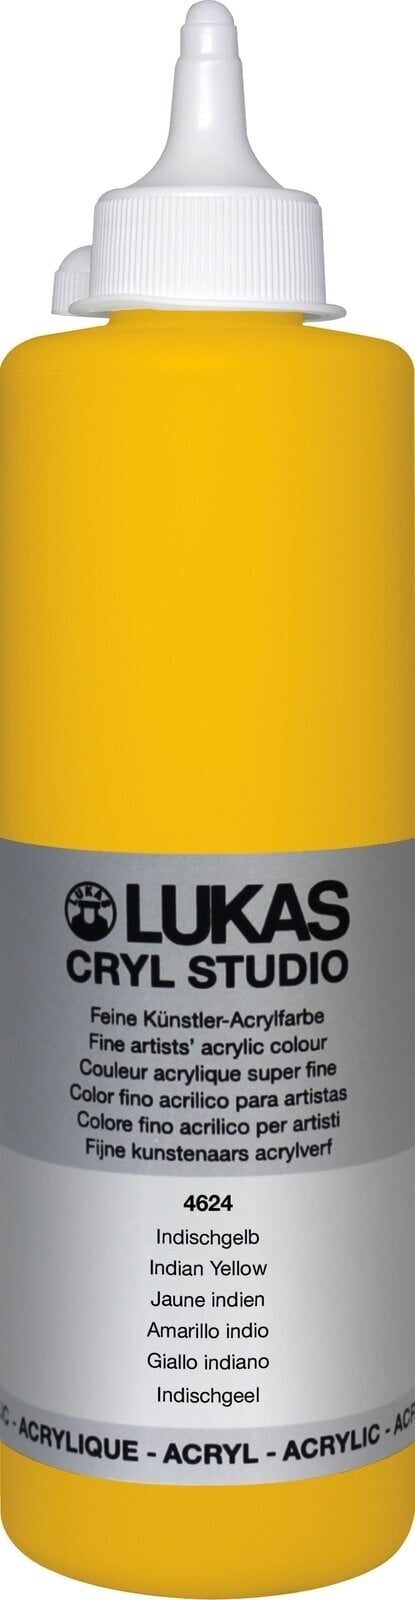 Tinta acrílica Lukas Cryl Studio Tinta acrílica 500 ml Indian Yellow